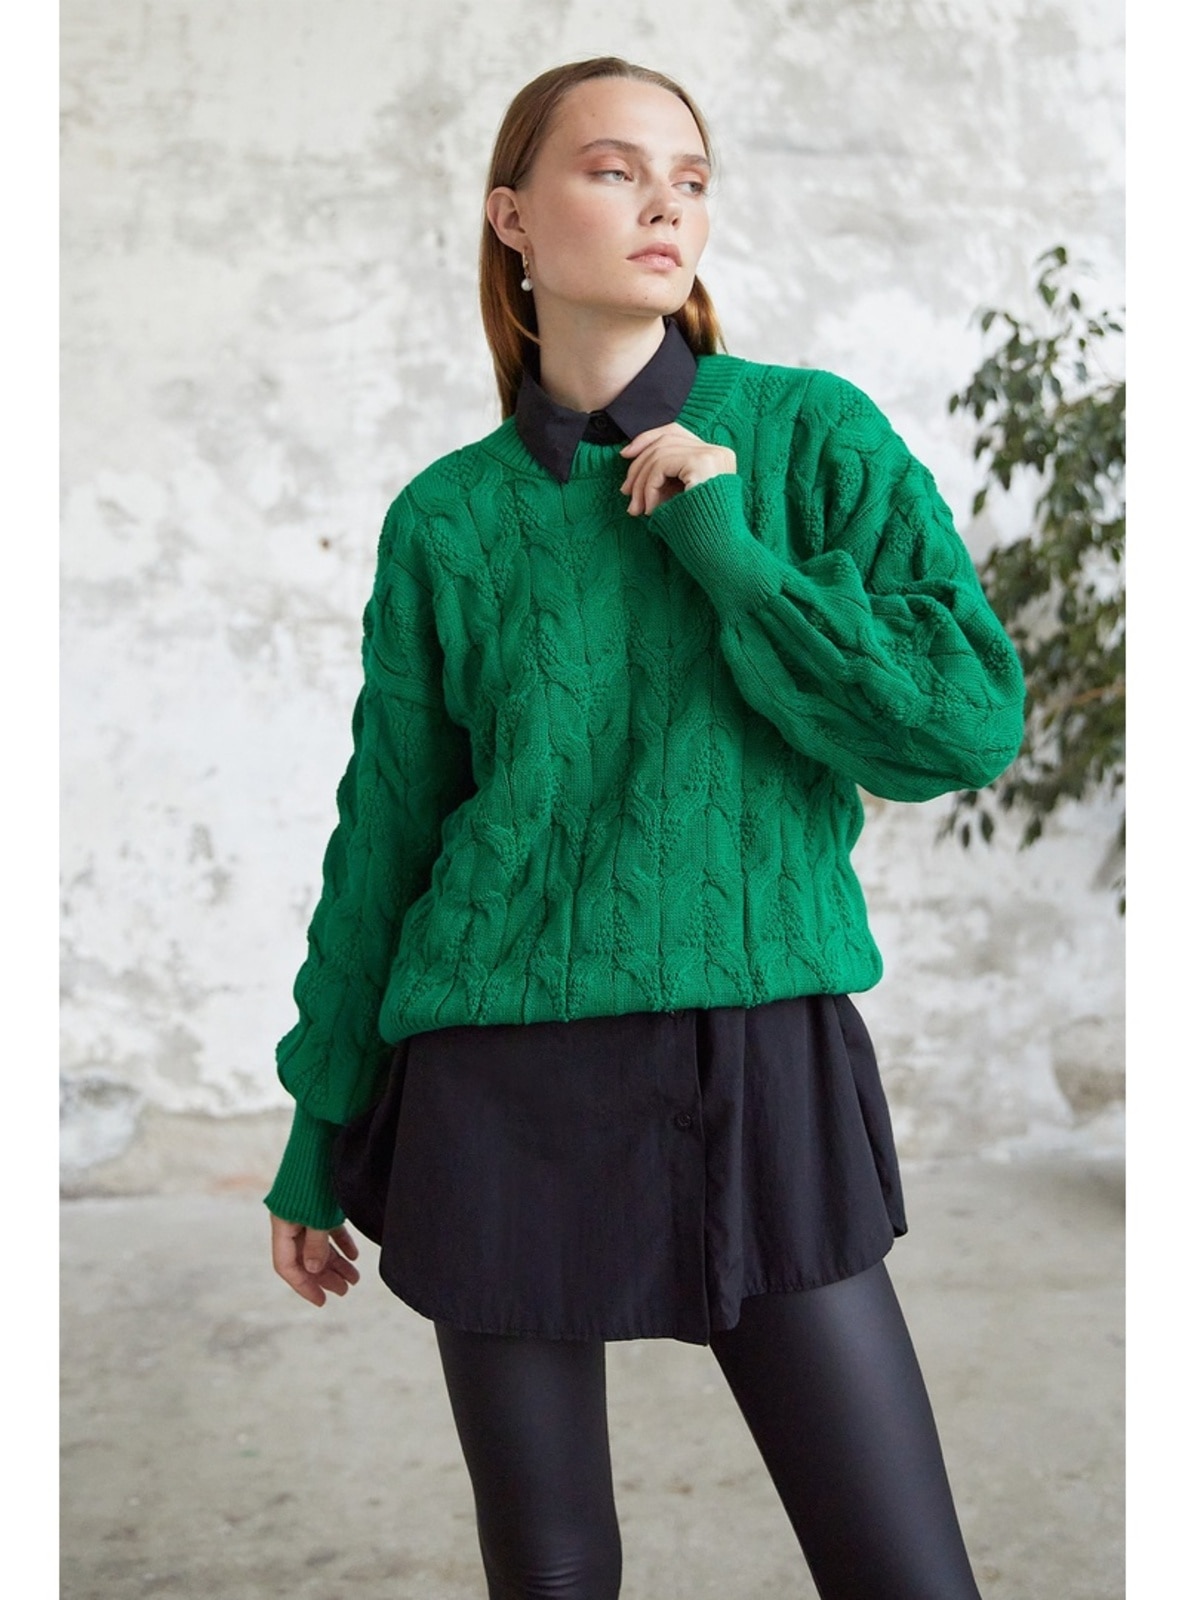 Green - Knit Sweaters